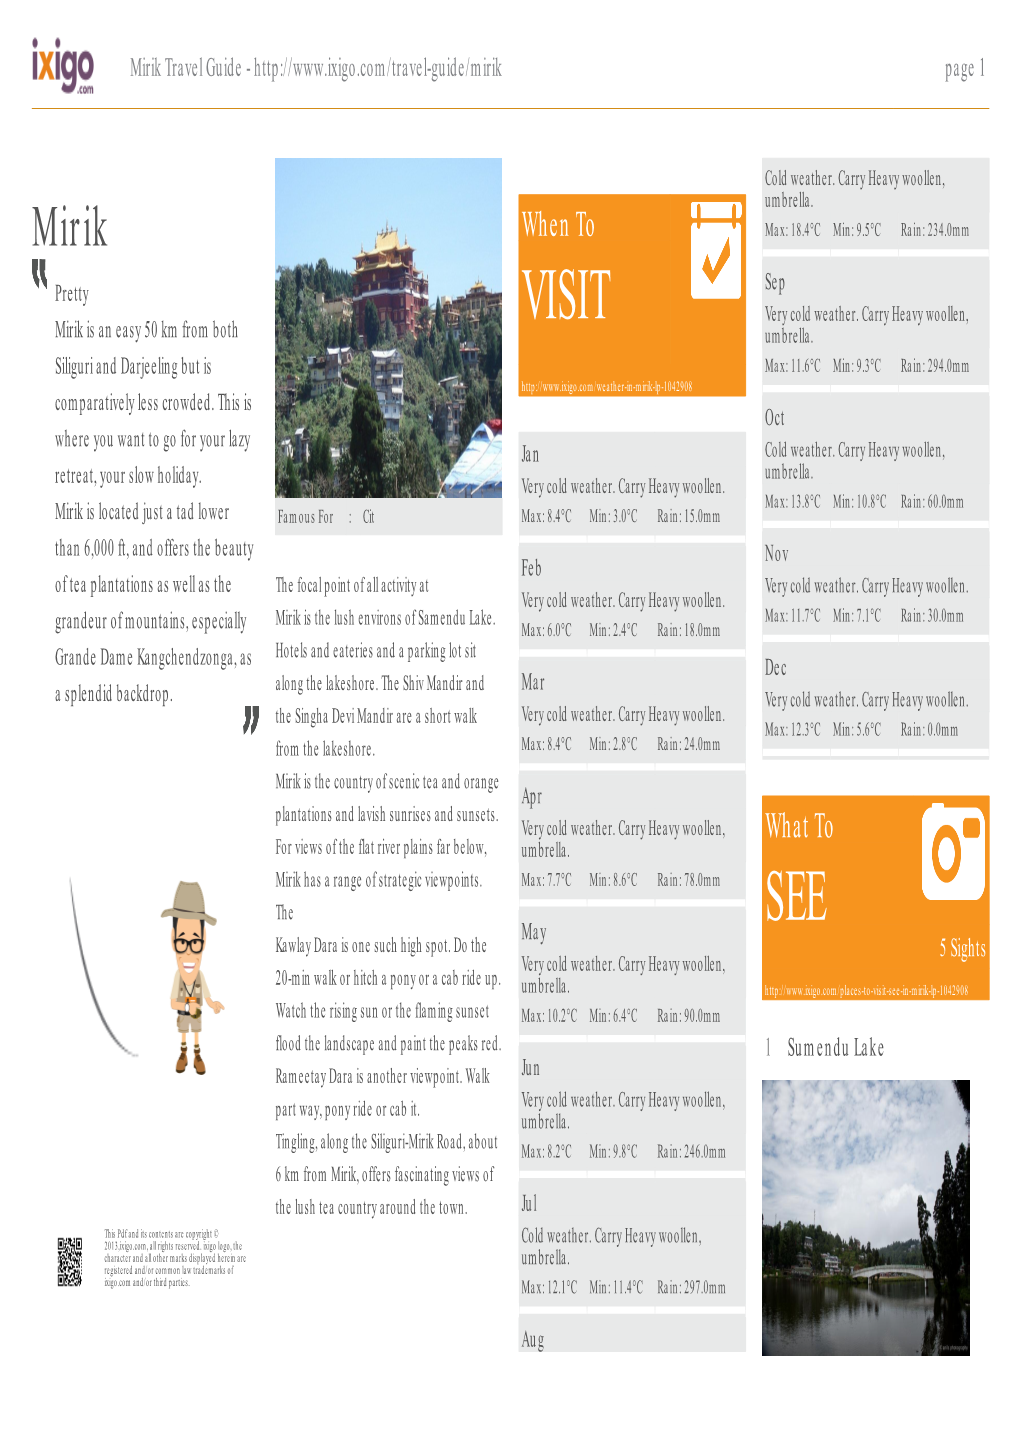 Mirik Travel Guide - Page 1